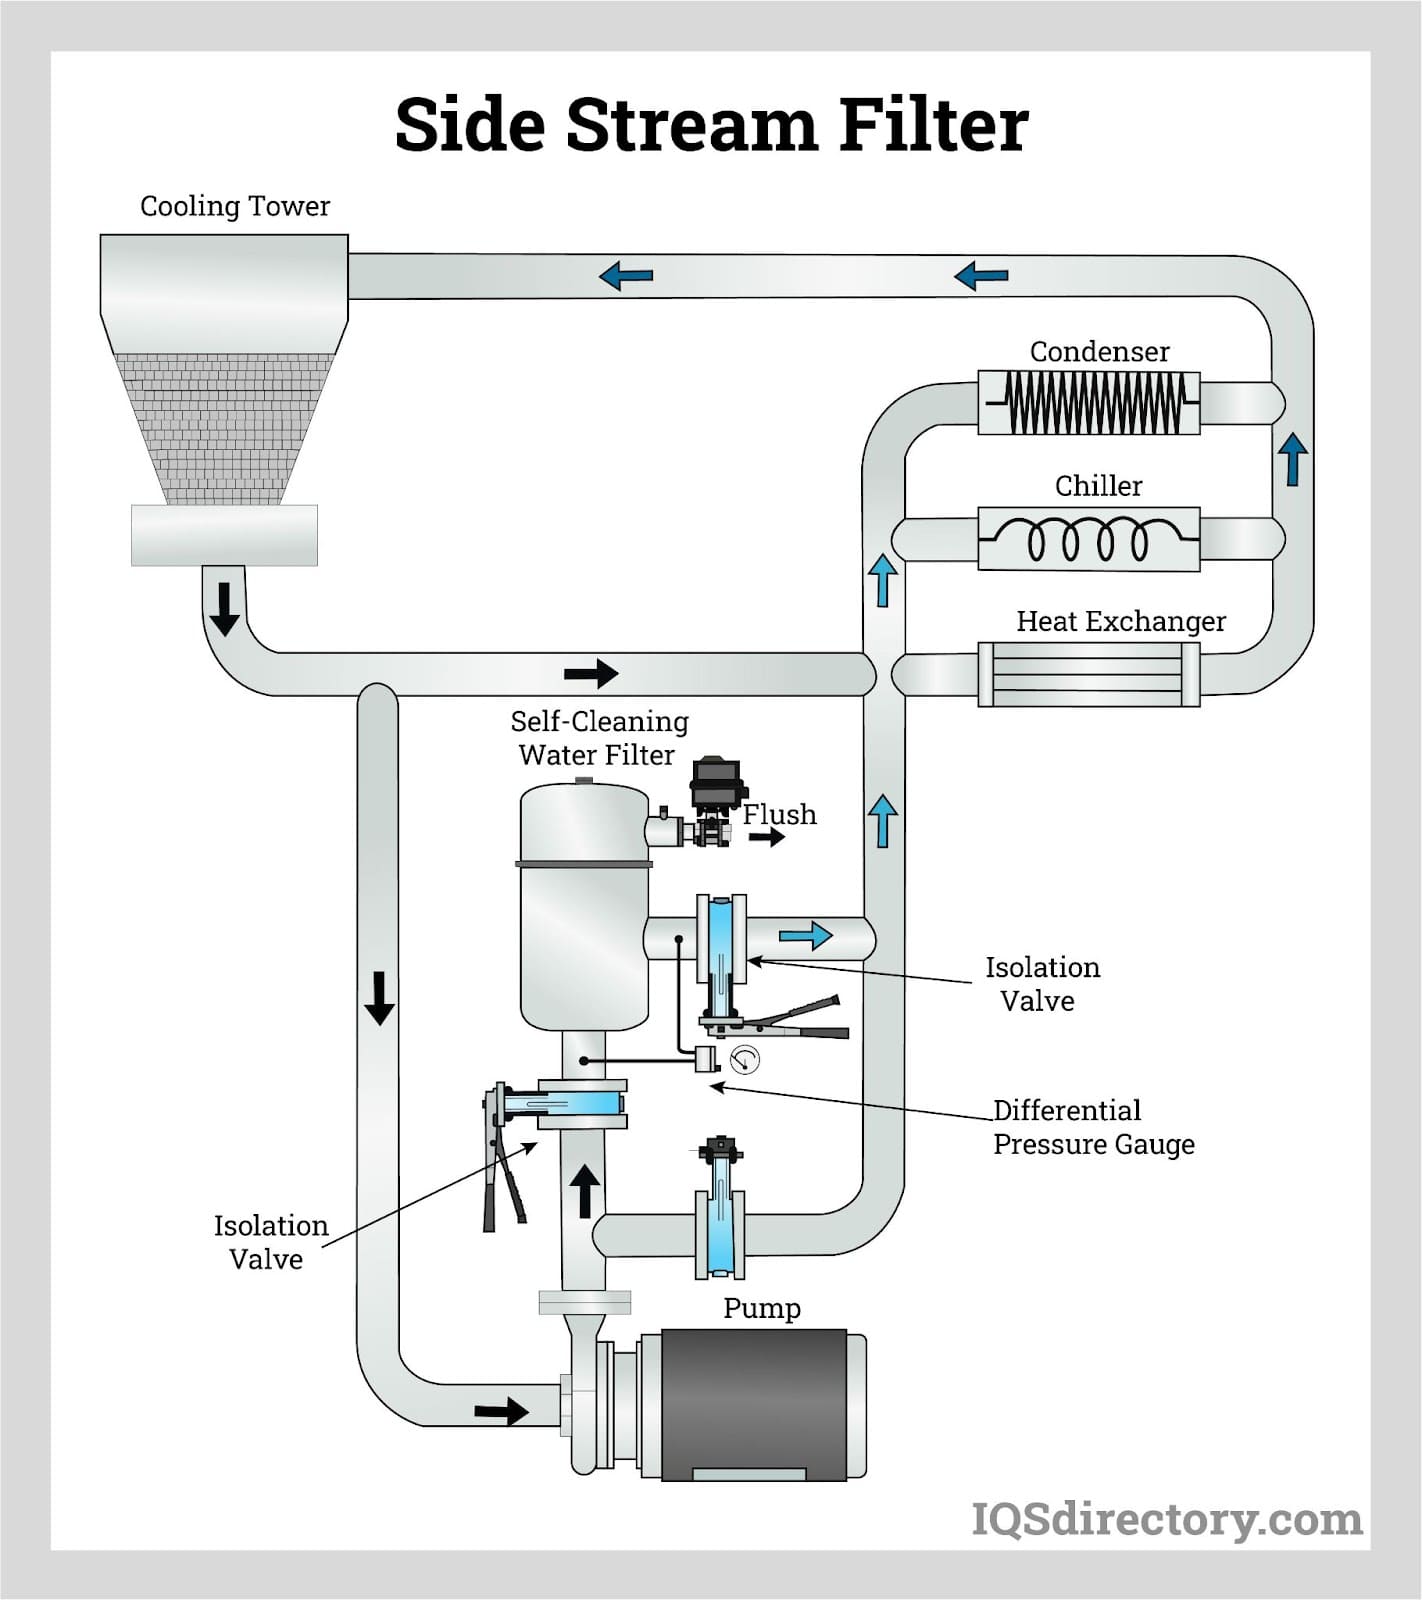 Side Stream Filter